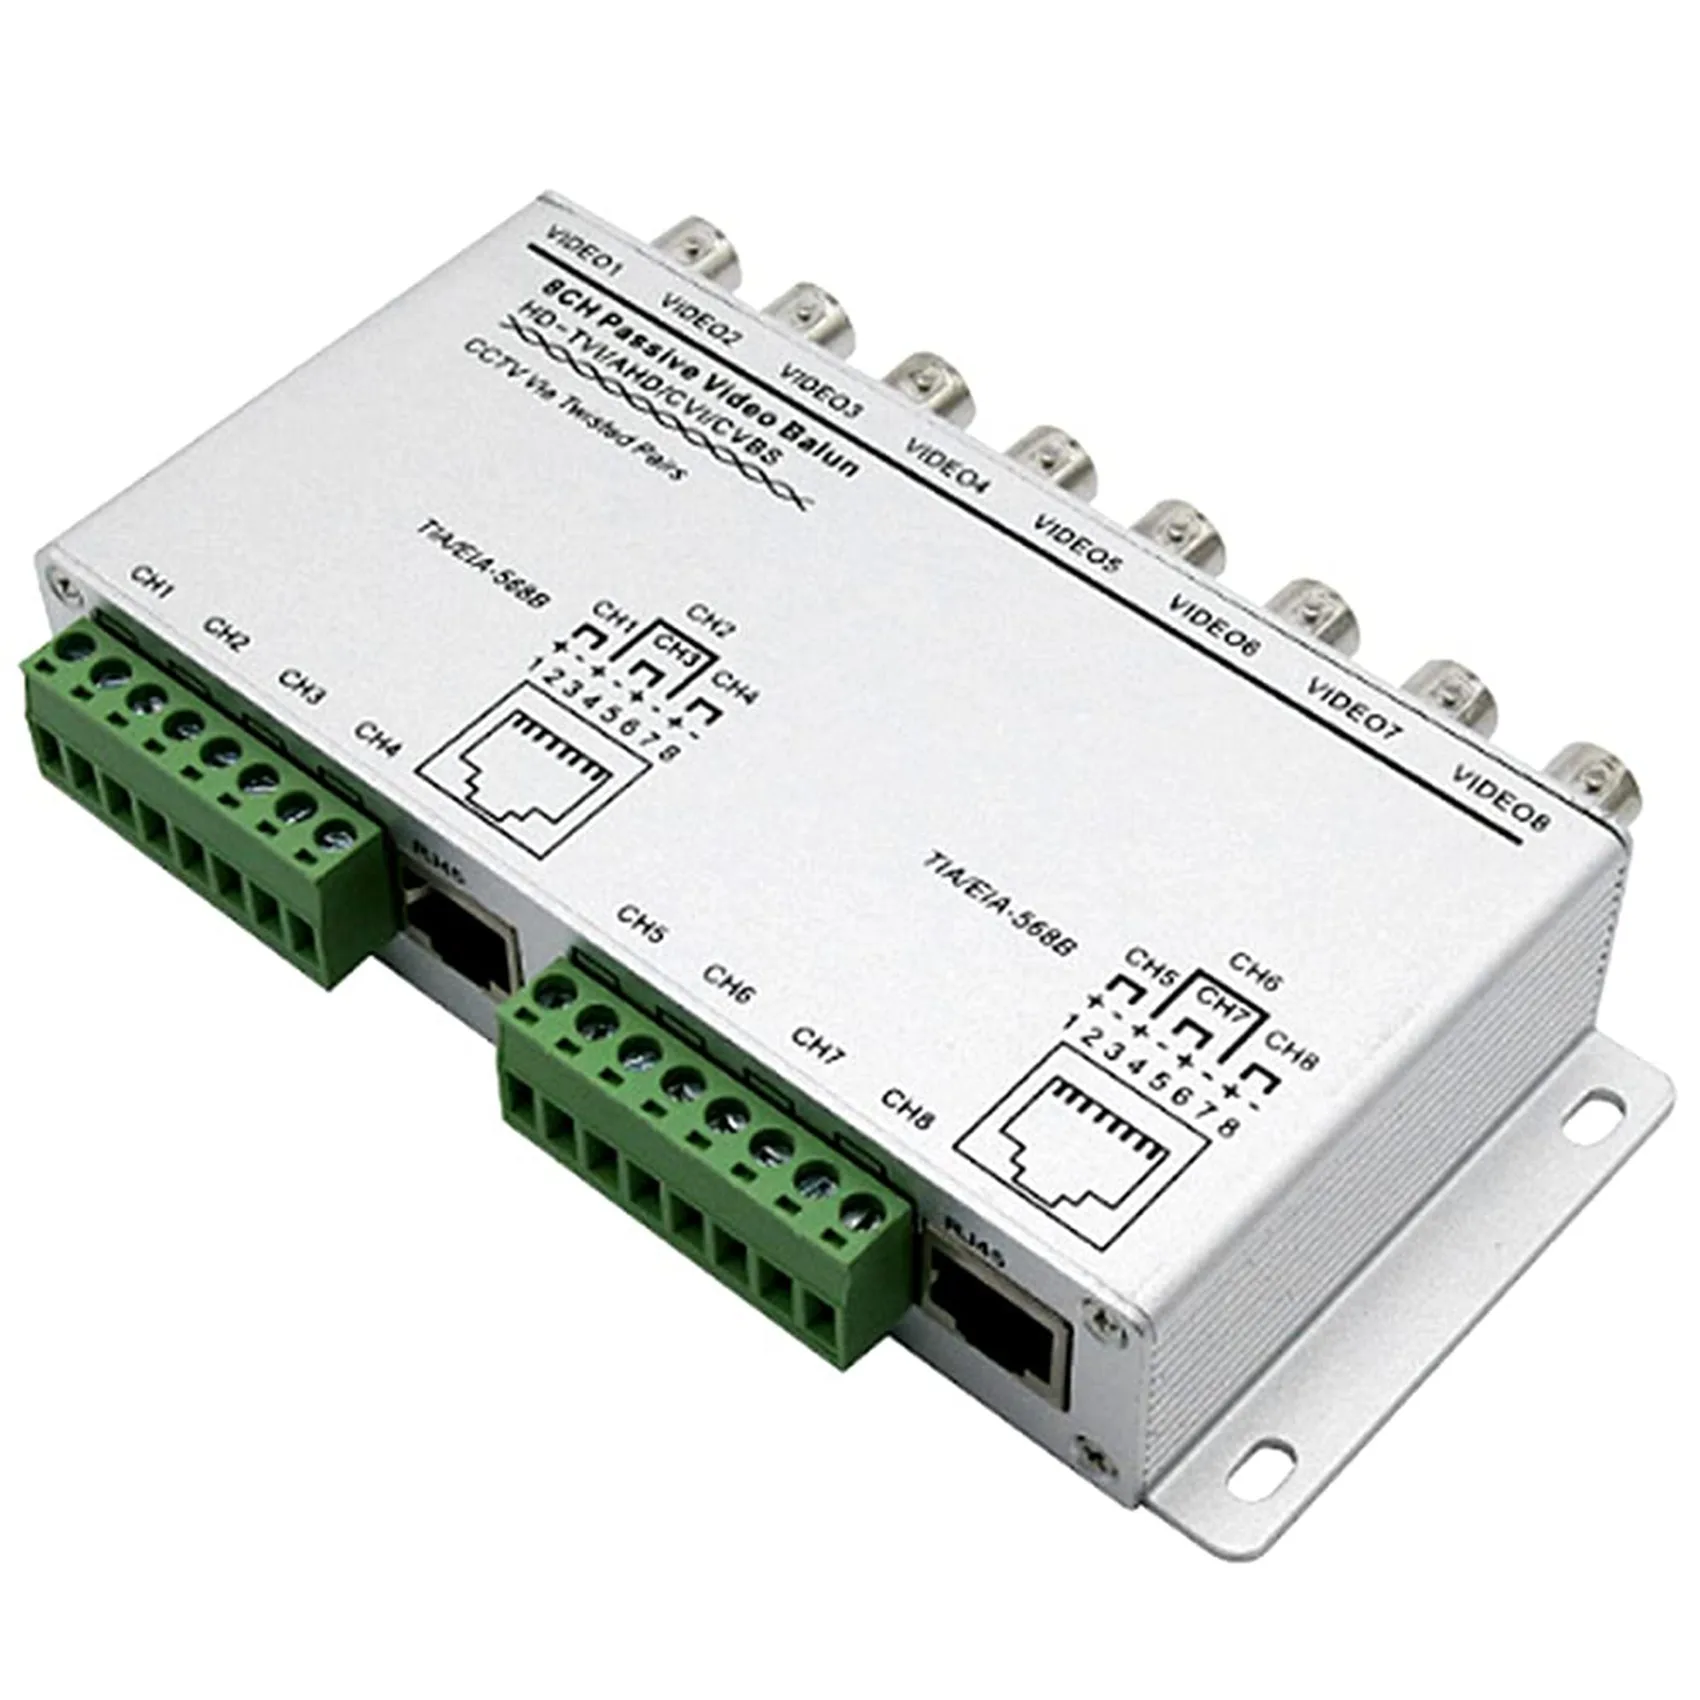 

8-CH UTP 720P/1080P HD Passive Video Balun Transceiver,BNC to Cat5/5E/6 RJ45(T568B)UTP Cable Converter Video Transmitter